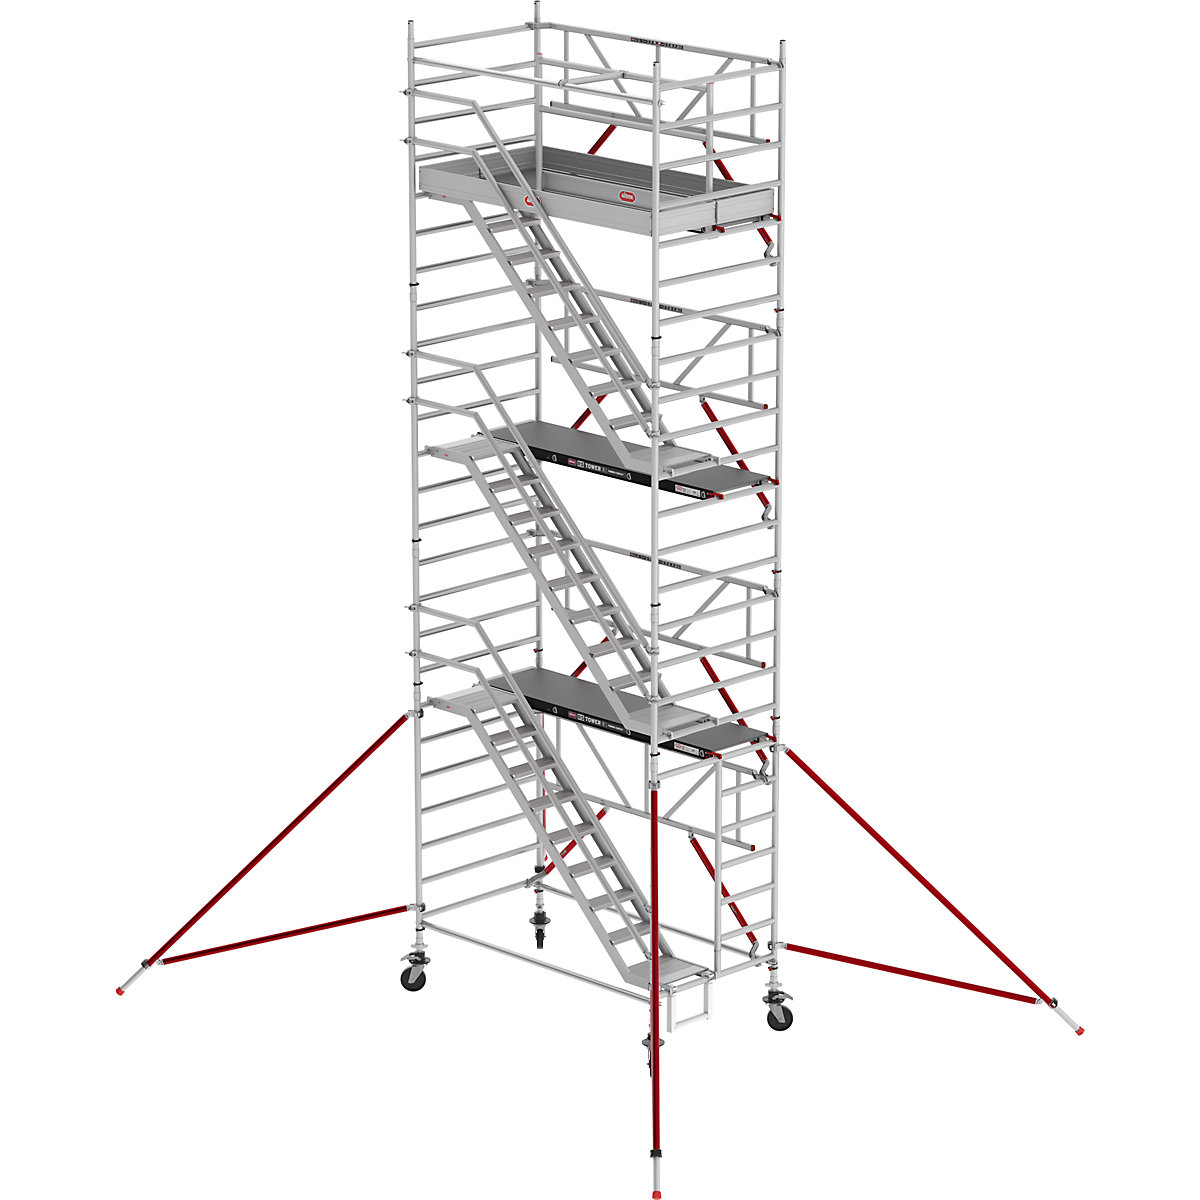 Oder s stopnicami RS TOWER 53, širok – Altrex, Fiber-Deck®, dolžina 2,45 m, delovna višina 8,20 m